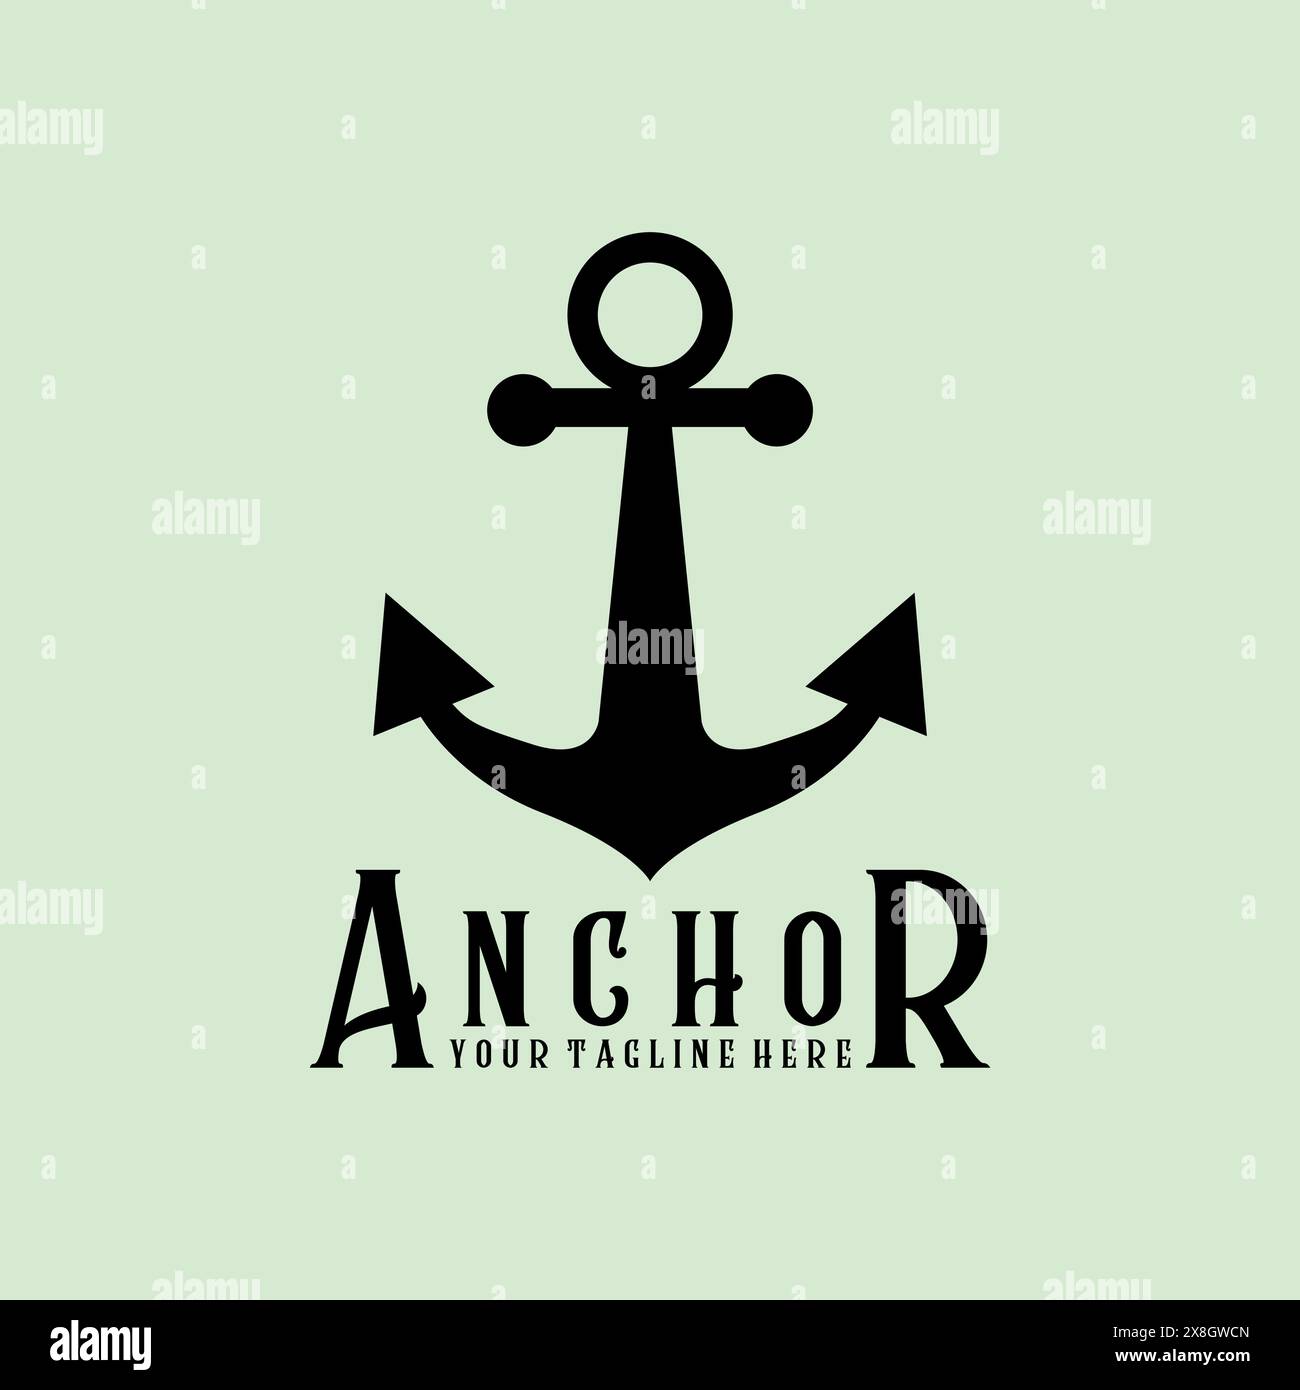 anchor vintage retro minimalist logo vector illustration design Stock Vector